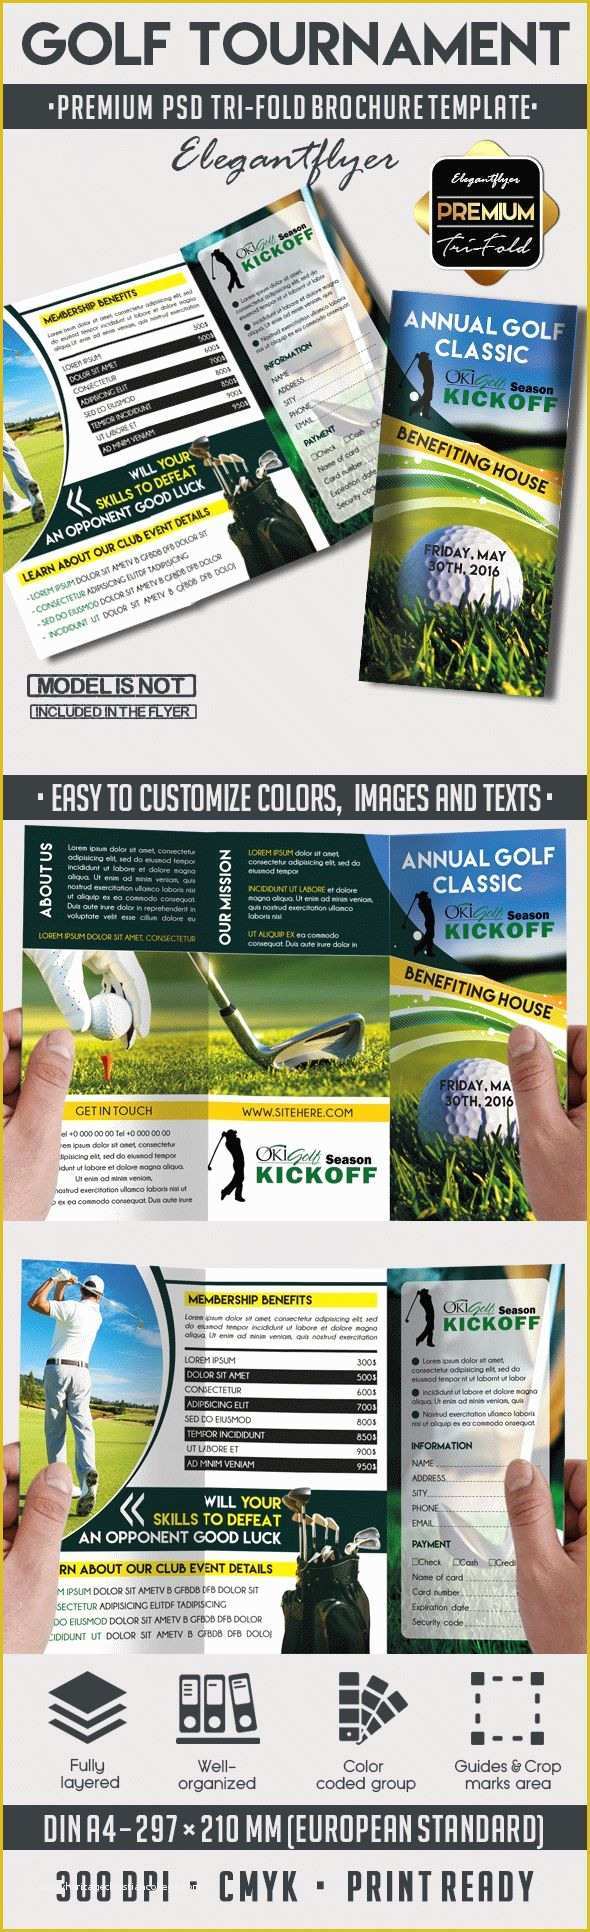 Free Golf Brochure Templates Of Tri Fold Template for Golf tournament – by Elegantflyer